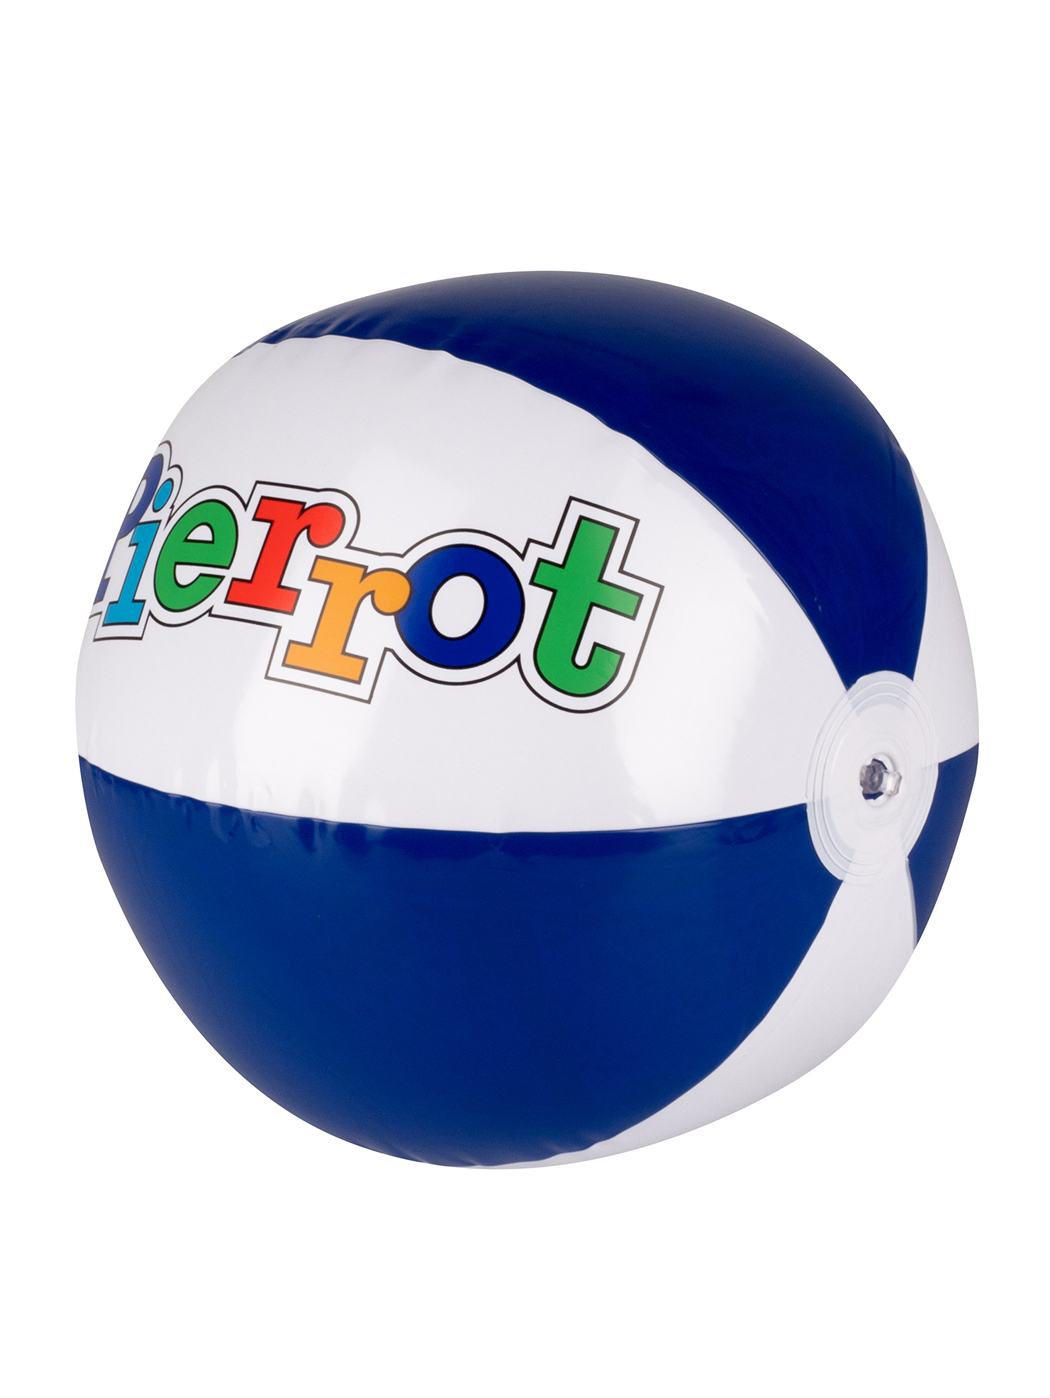 Pierrot waterball